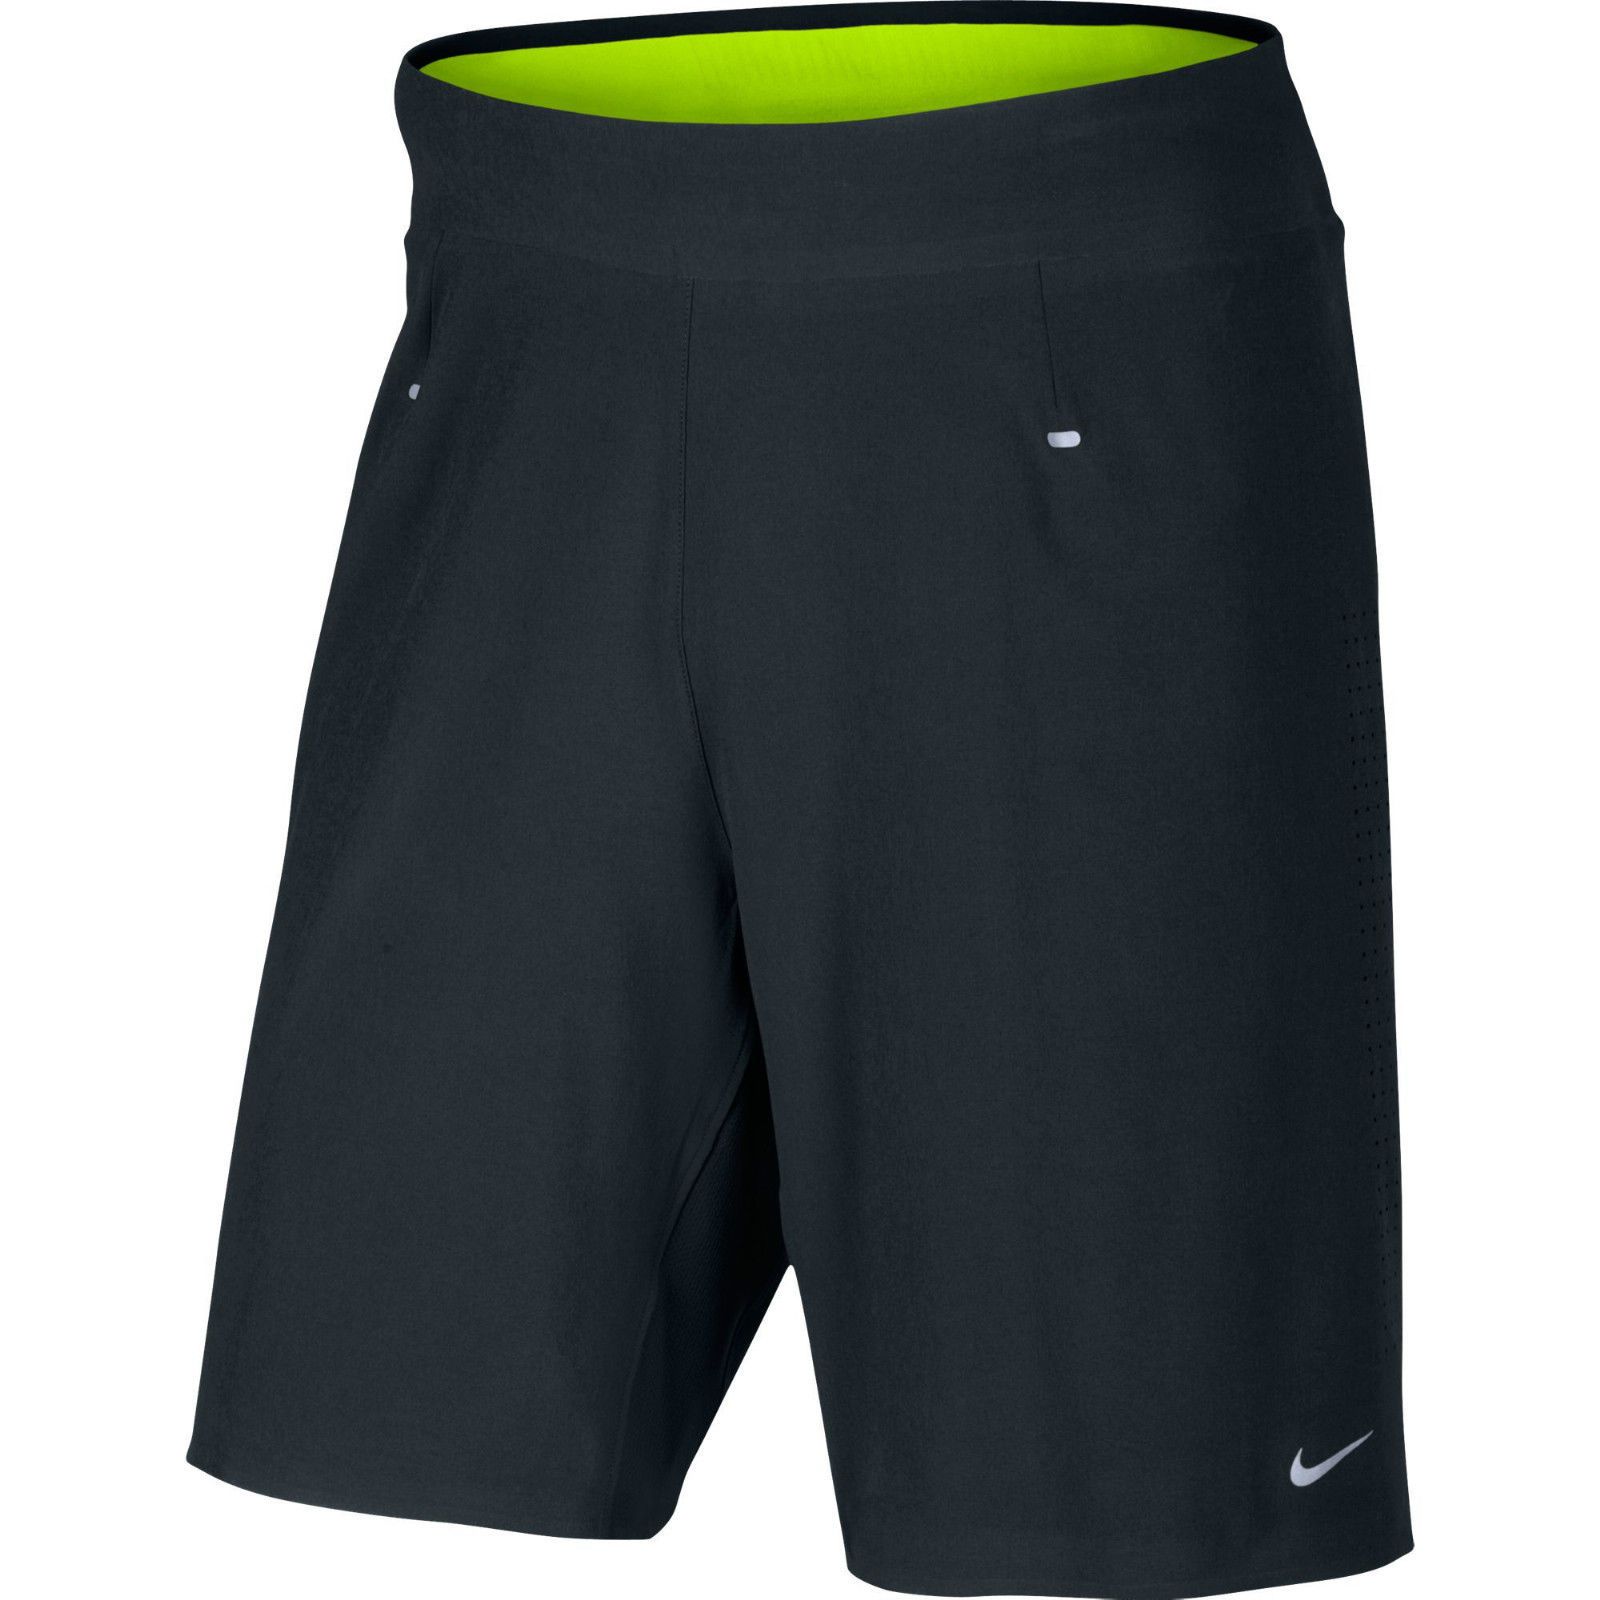 Nike Men's Dri Fit Running Short